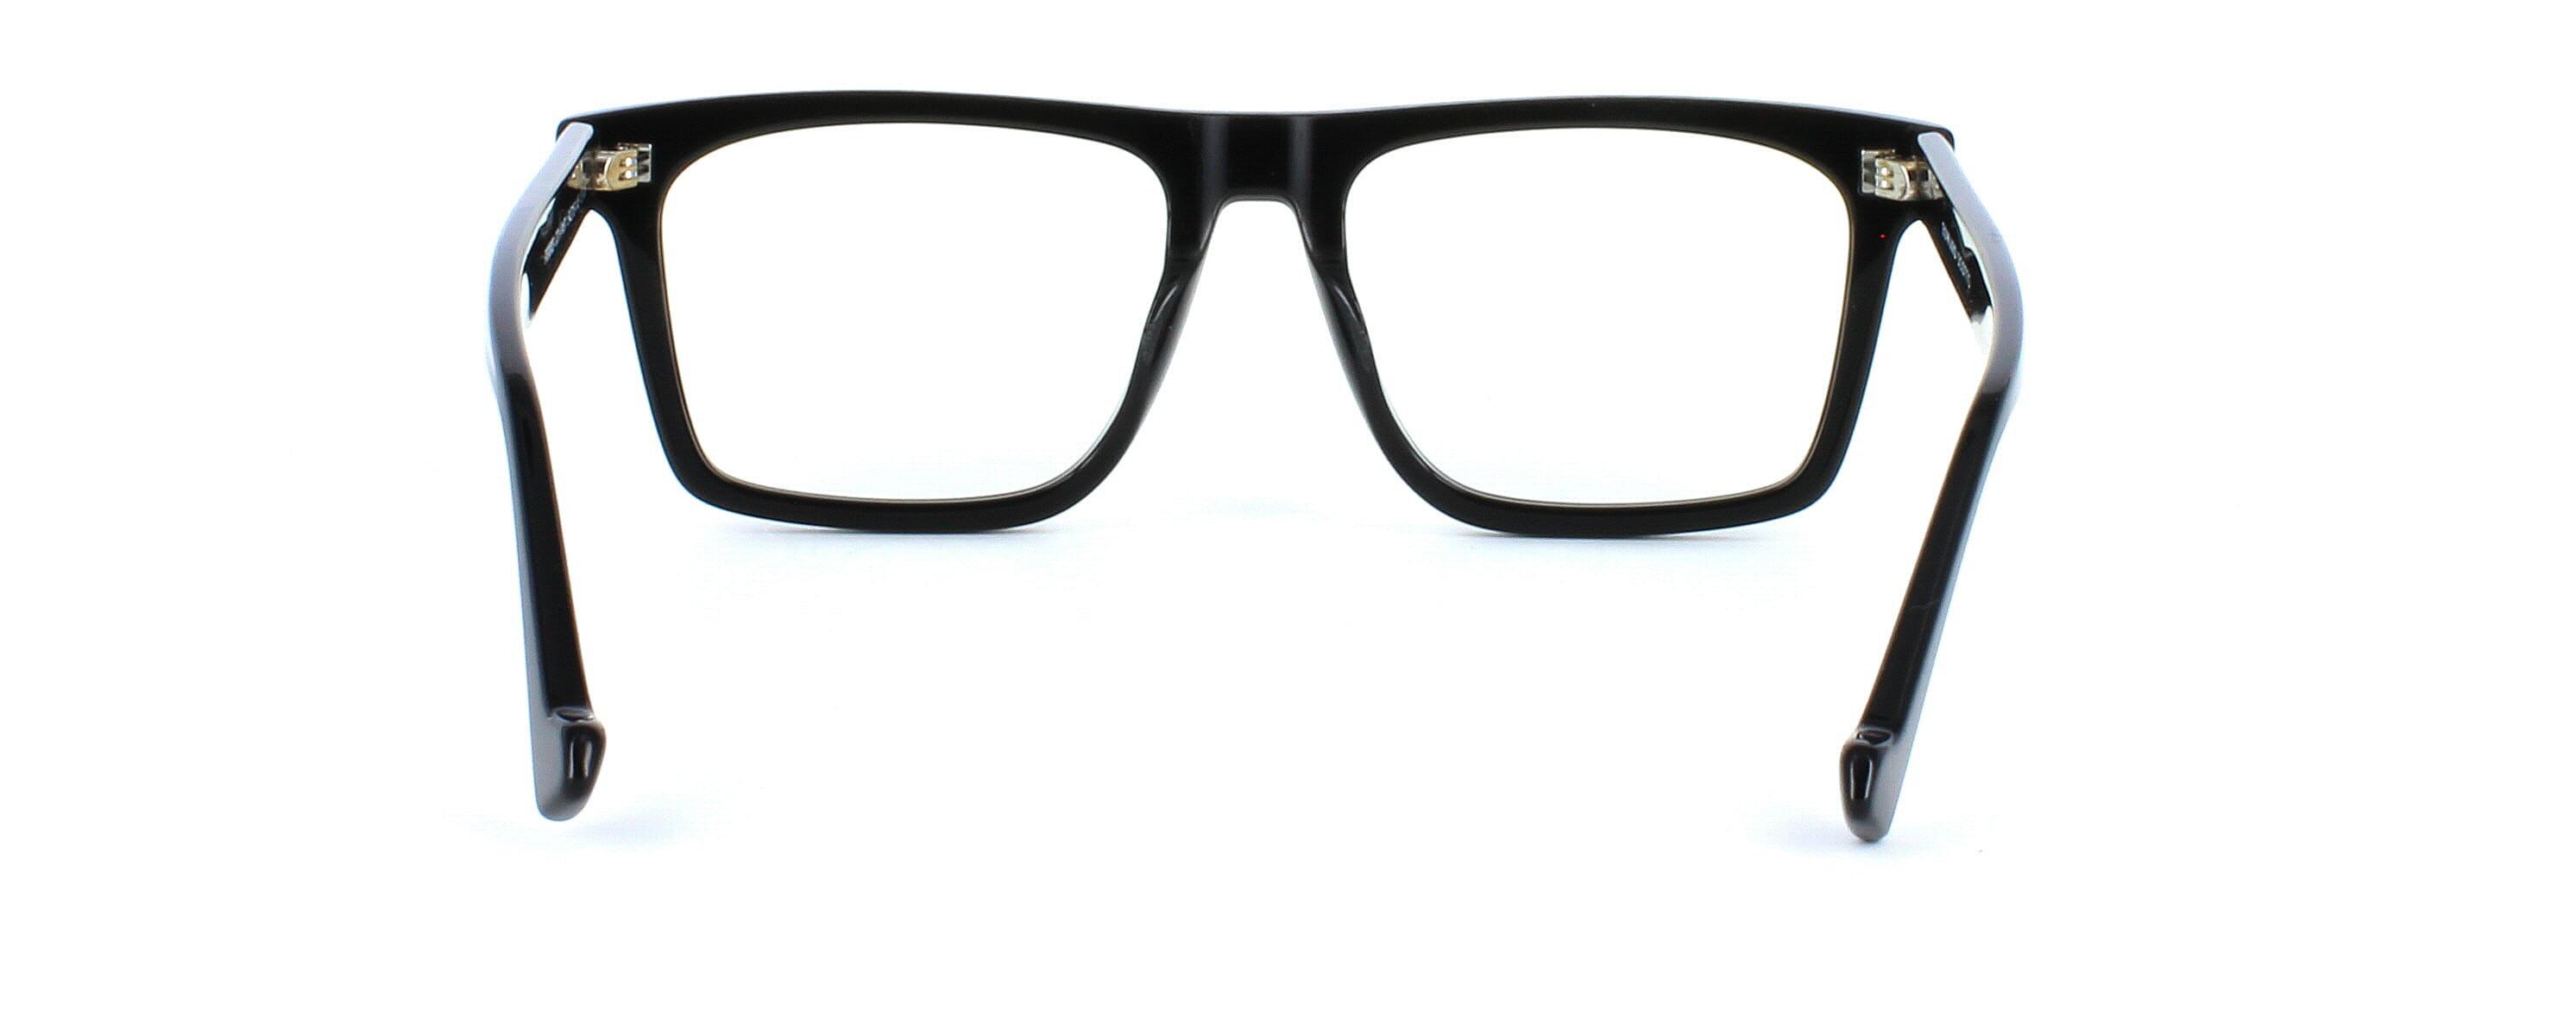 Edward Scotts PS8809 - Shiny black - Gent's bold chunky acetate glasses with rectangular shaped lenses - image view 4